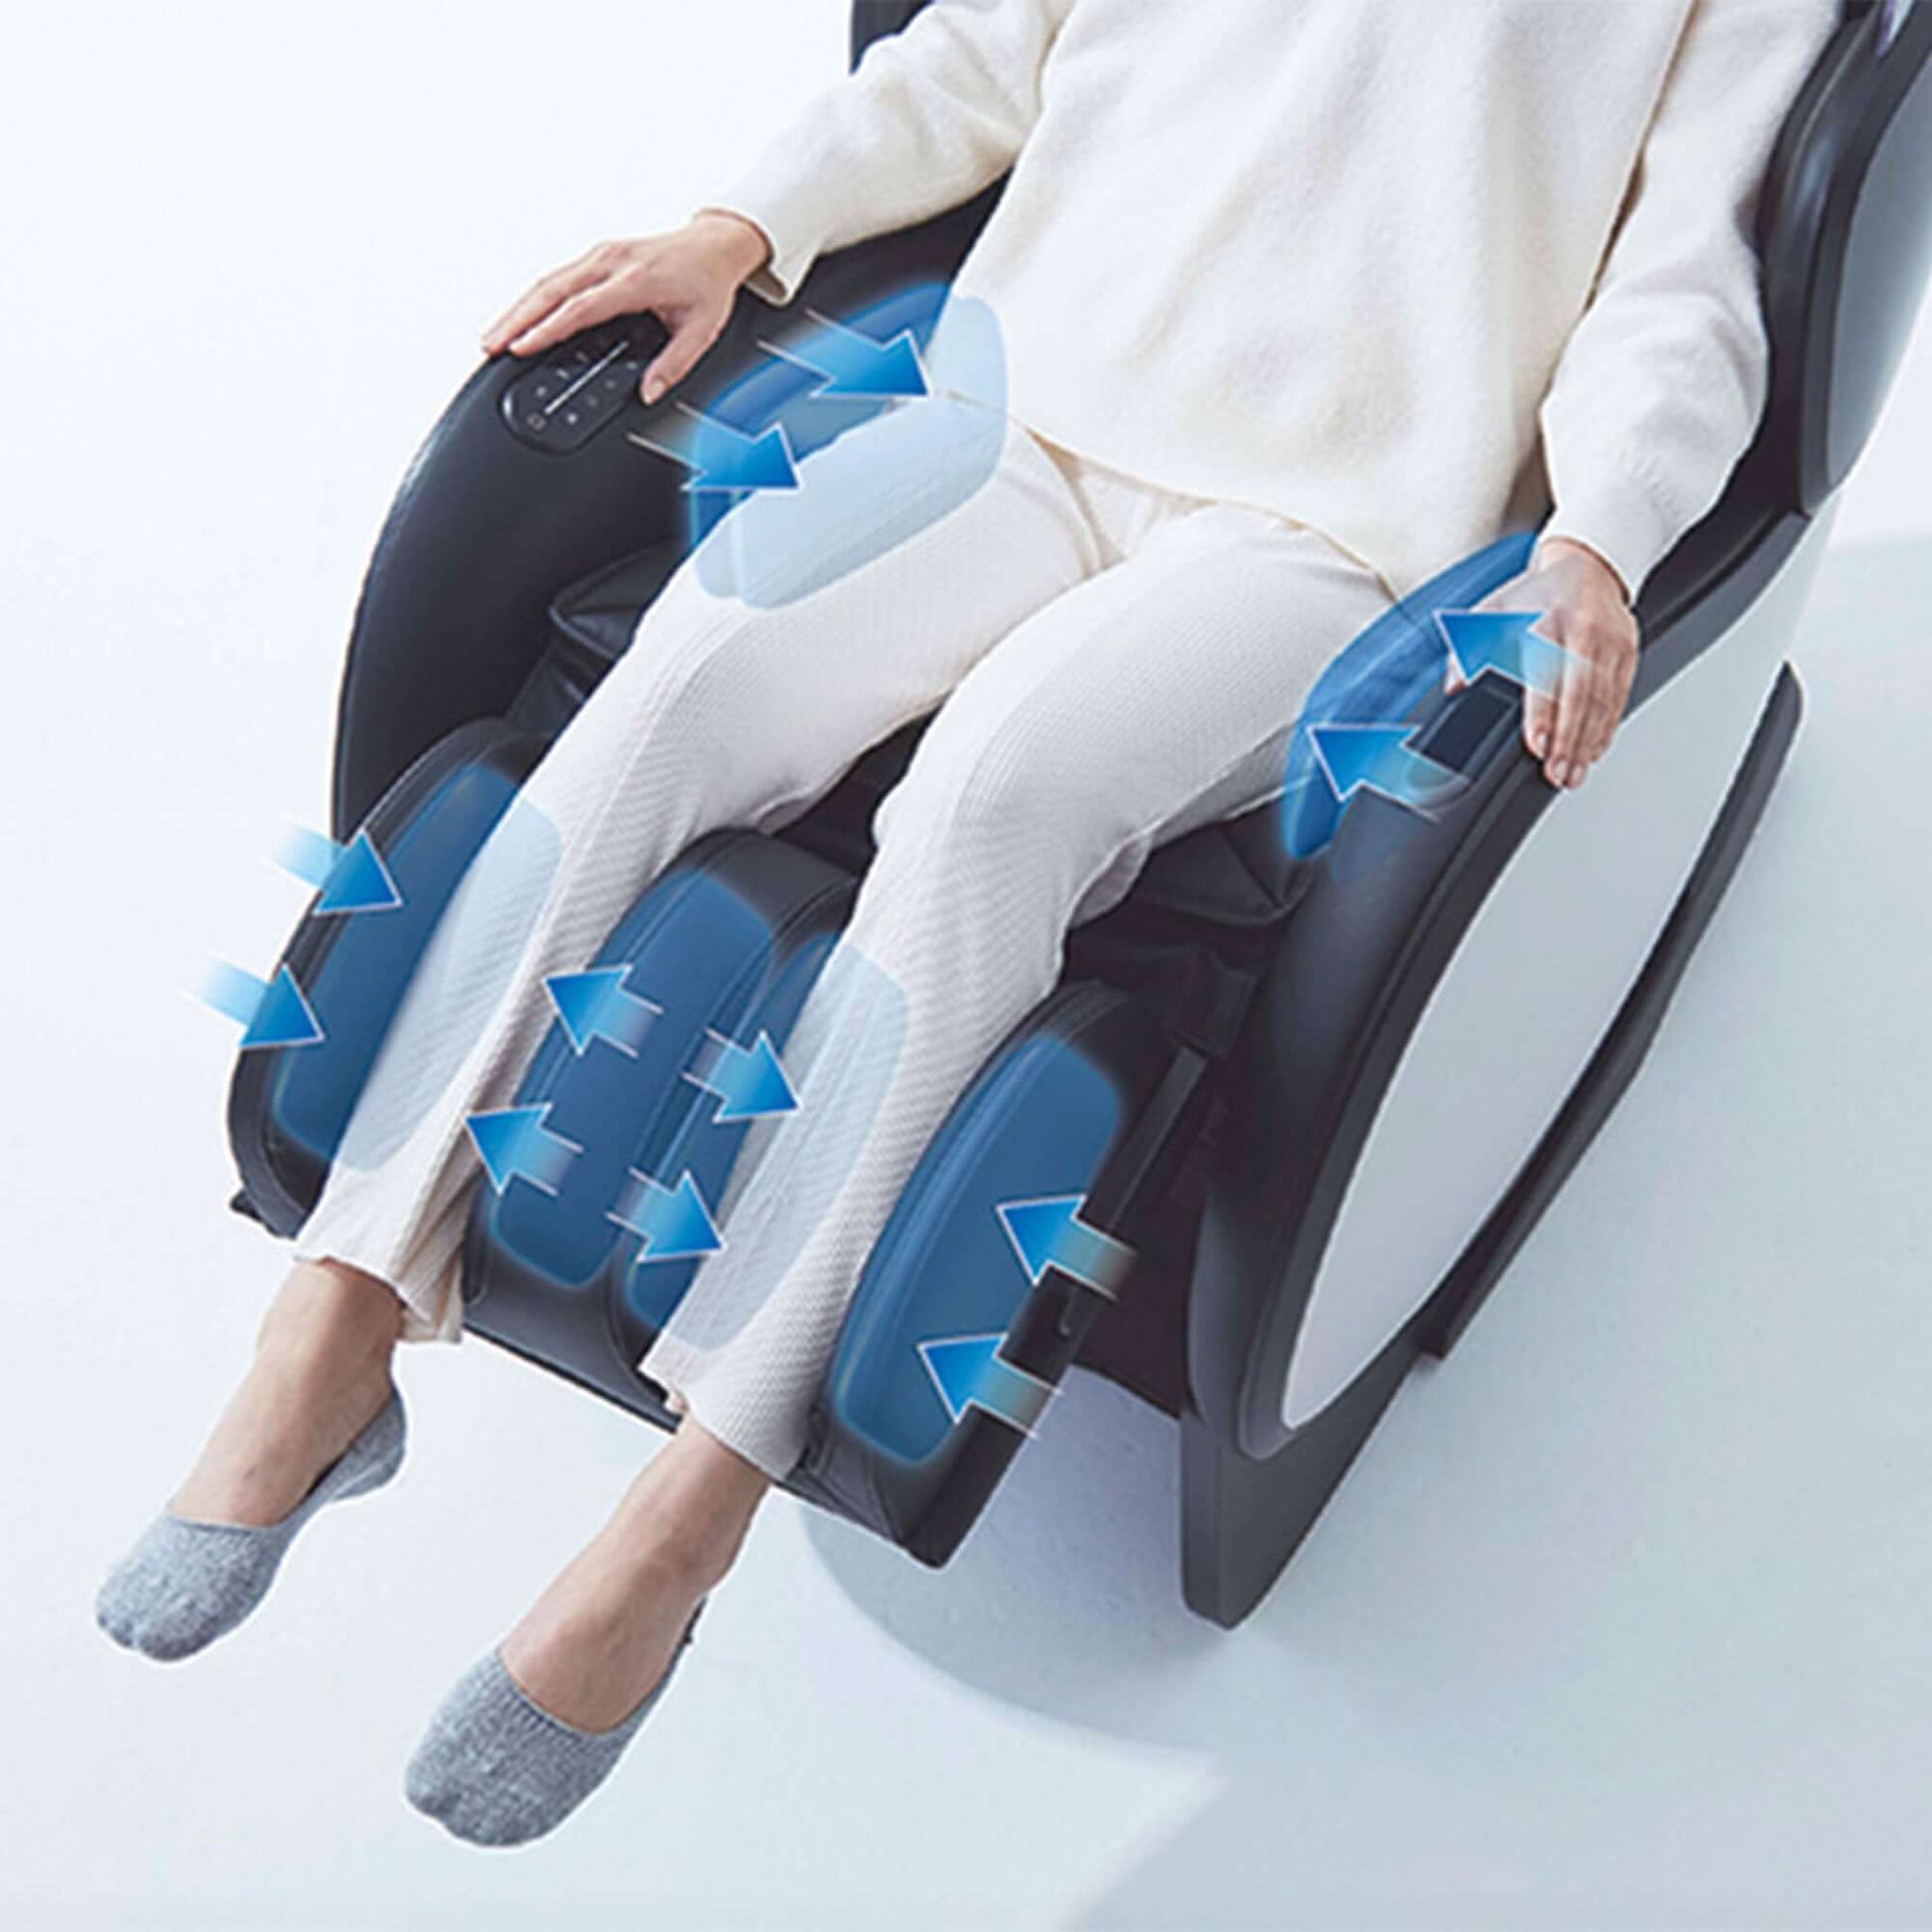 Synca Wellness CirC 3 Zero Gravity SL Track Heated Massage Chair - Electric Massaging Chairs